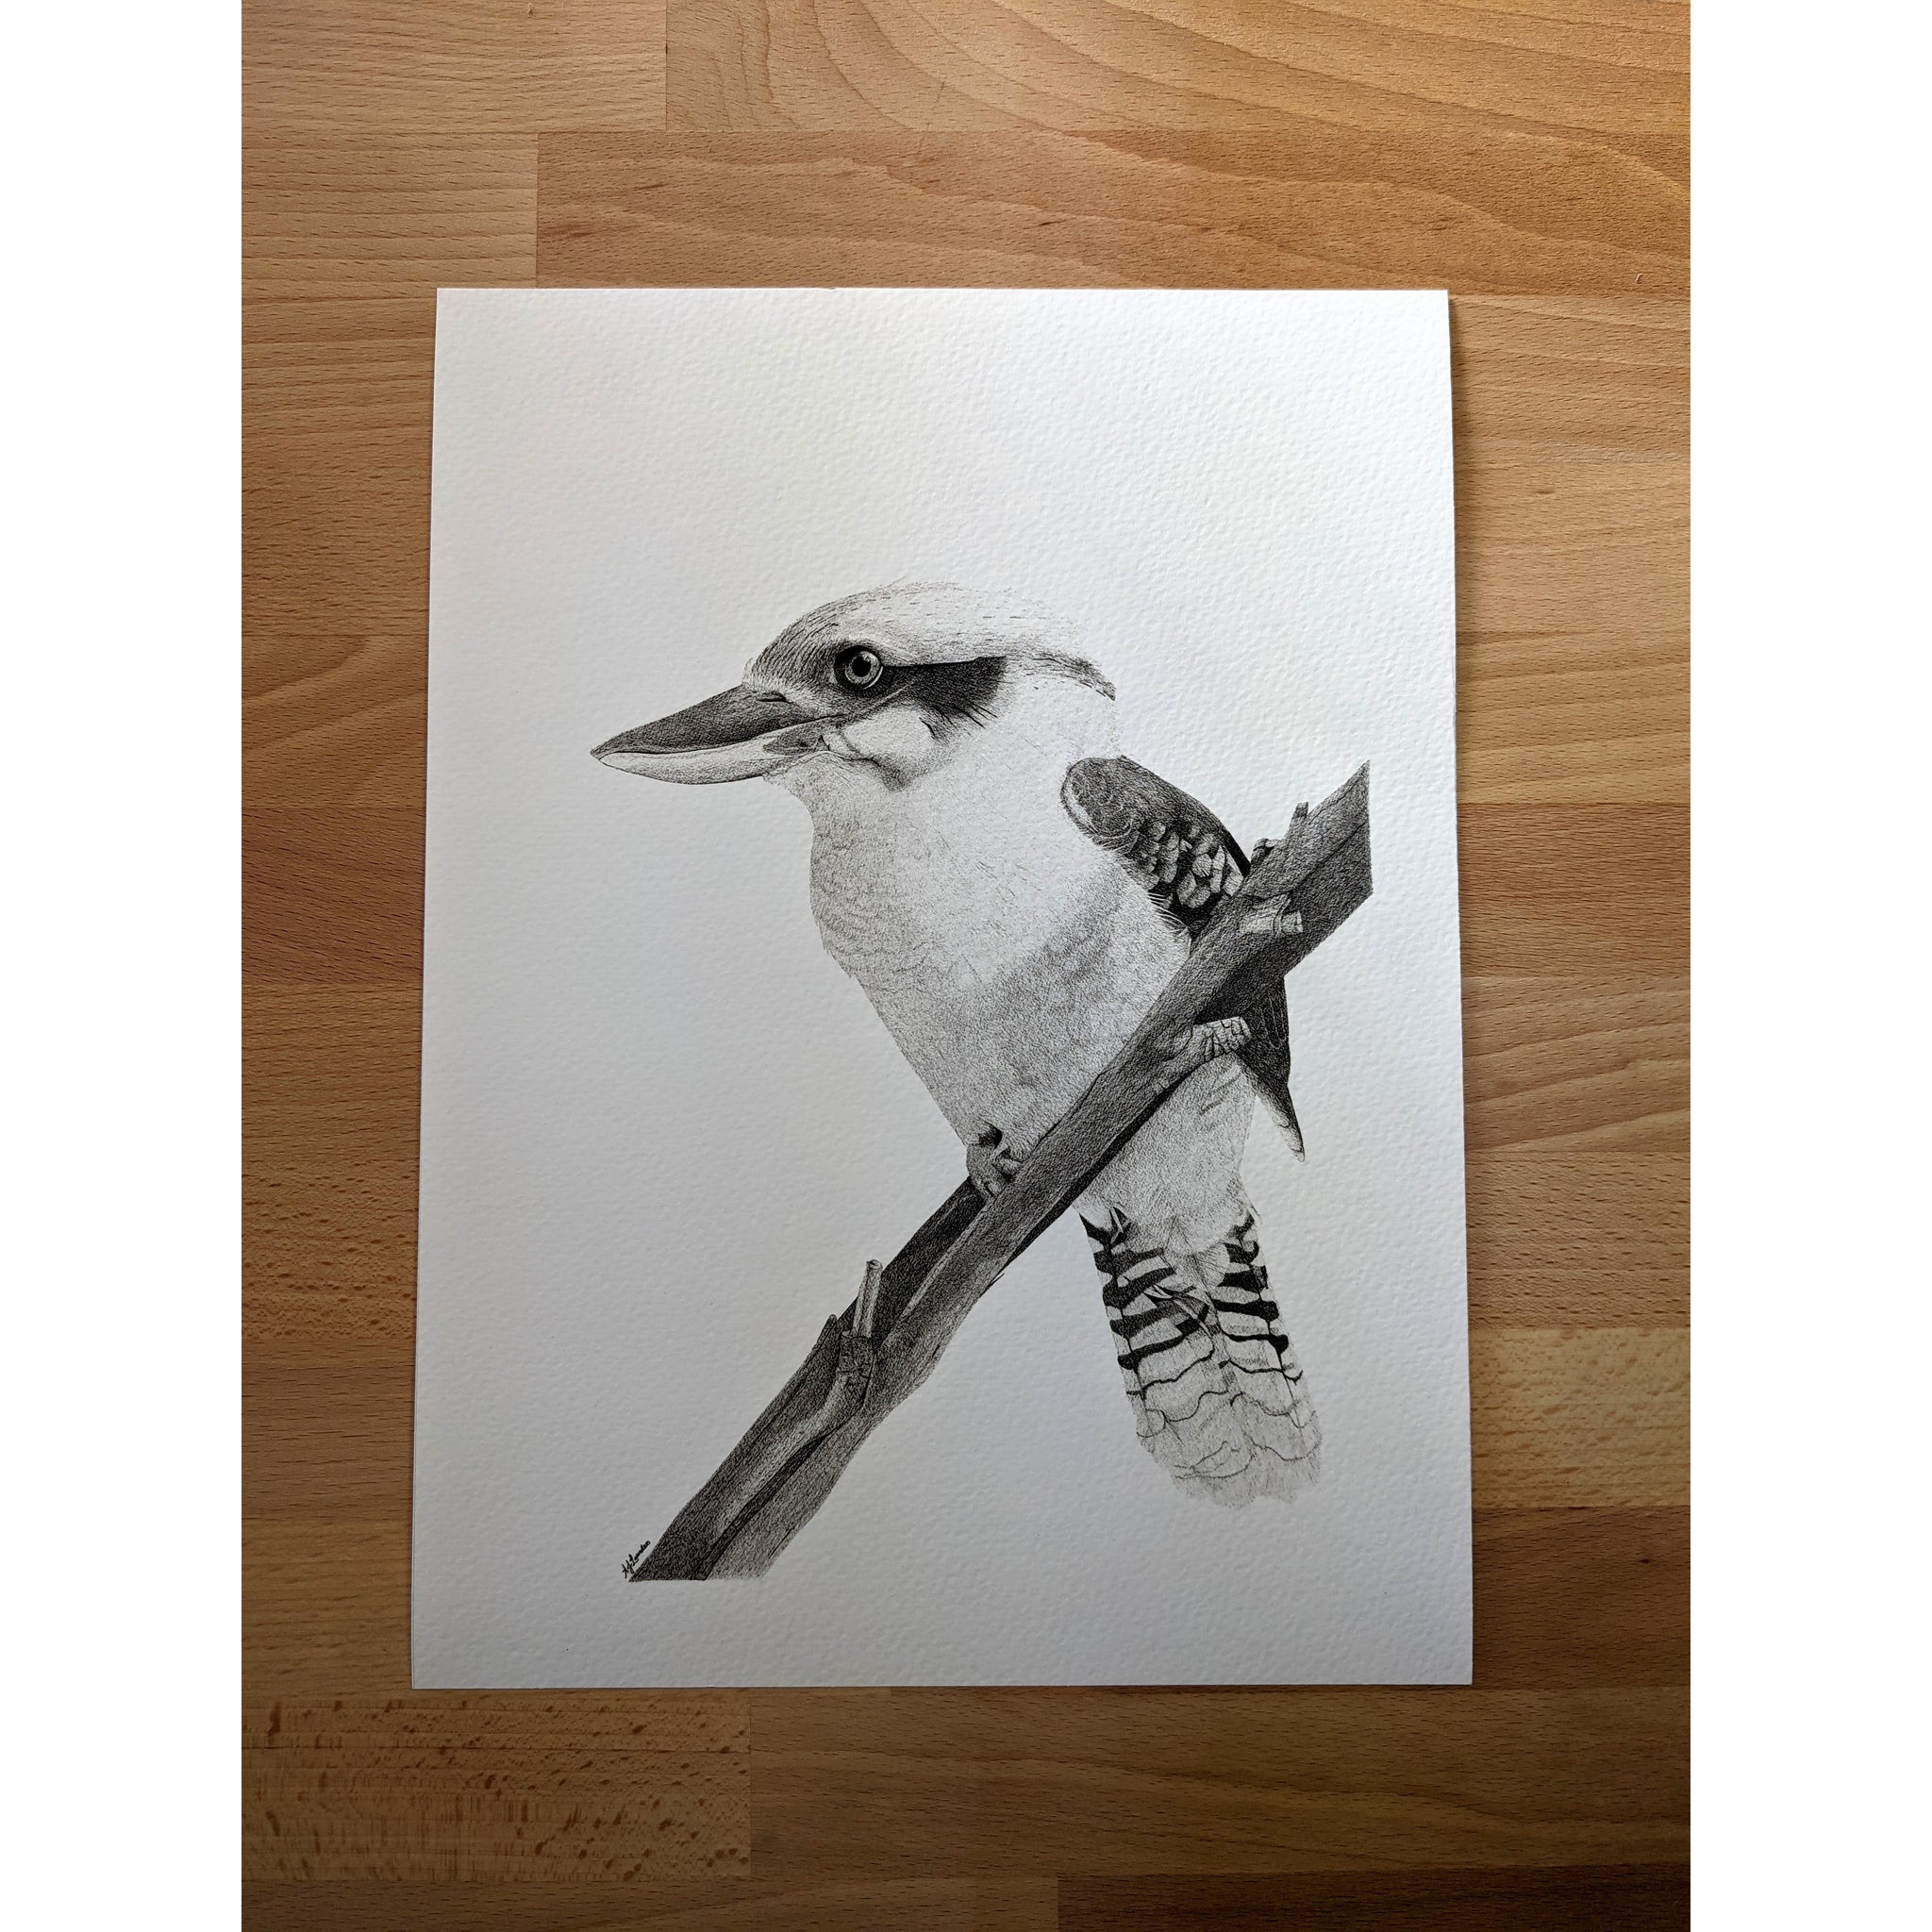 Laughing Kookaburra art, Australian bird drawing art print, original art Brisbane Australia by AJ Laundess